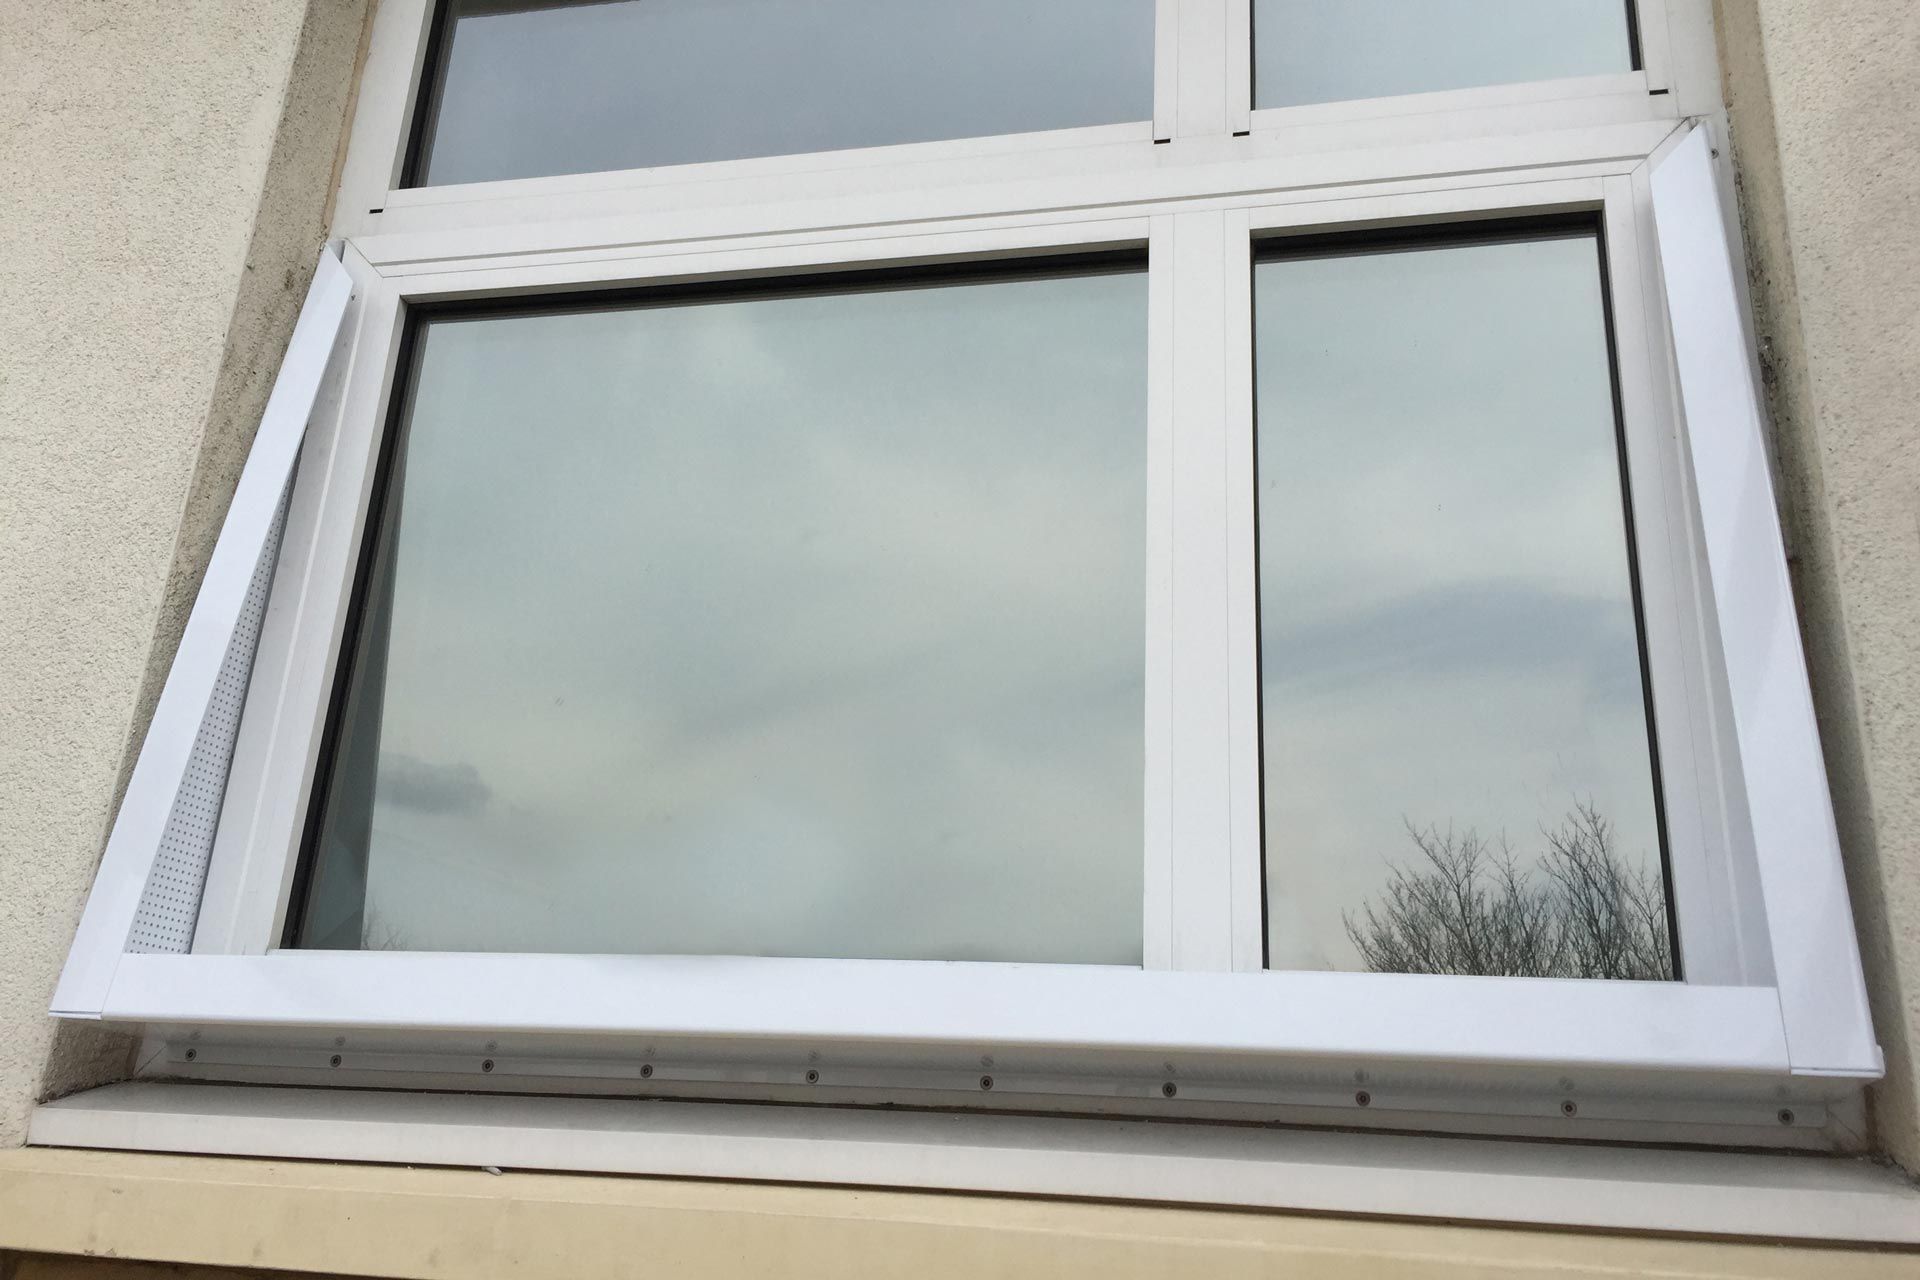 Double-flanged window restrictors